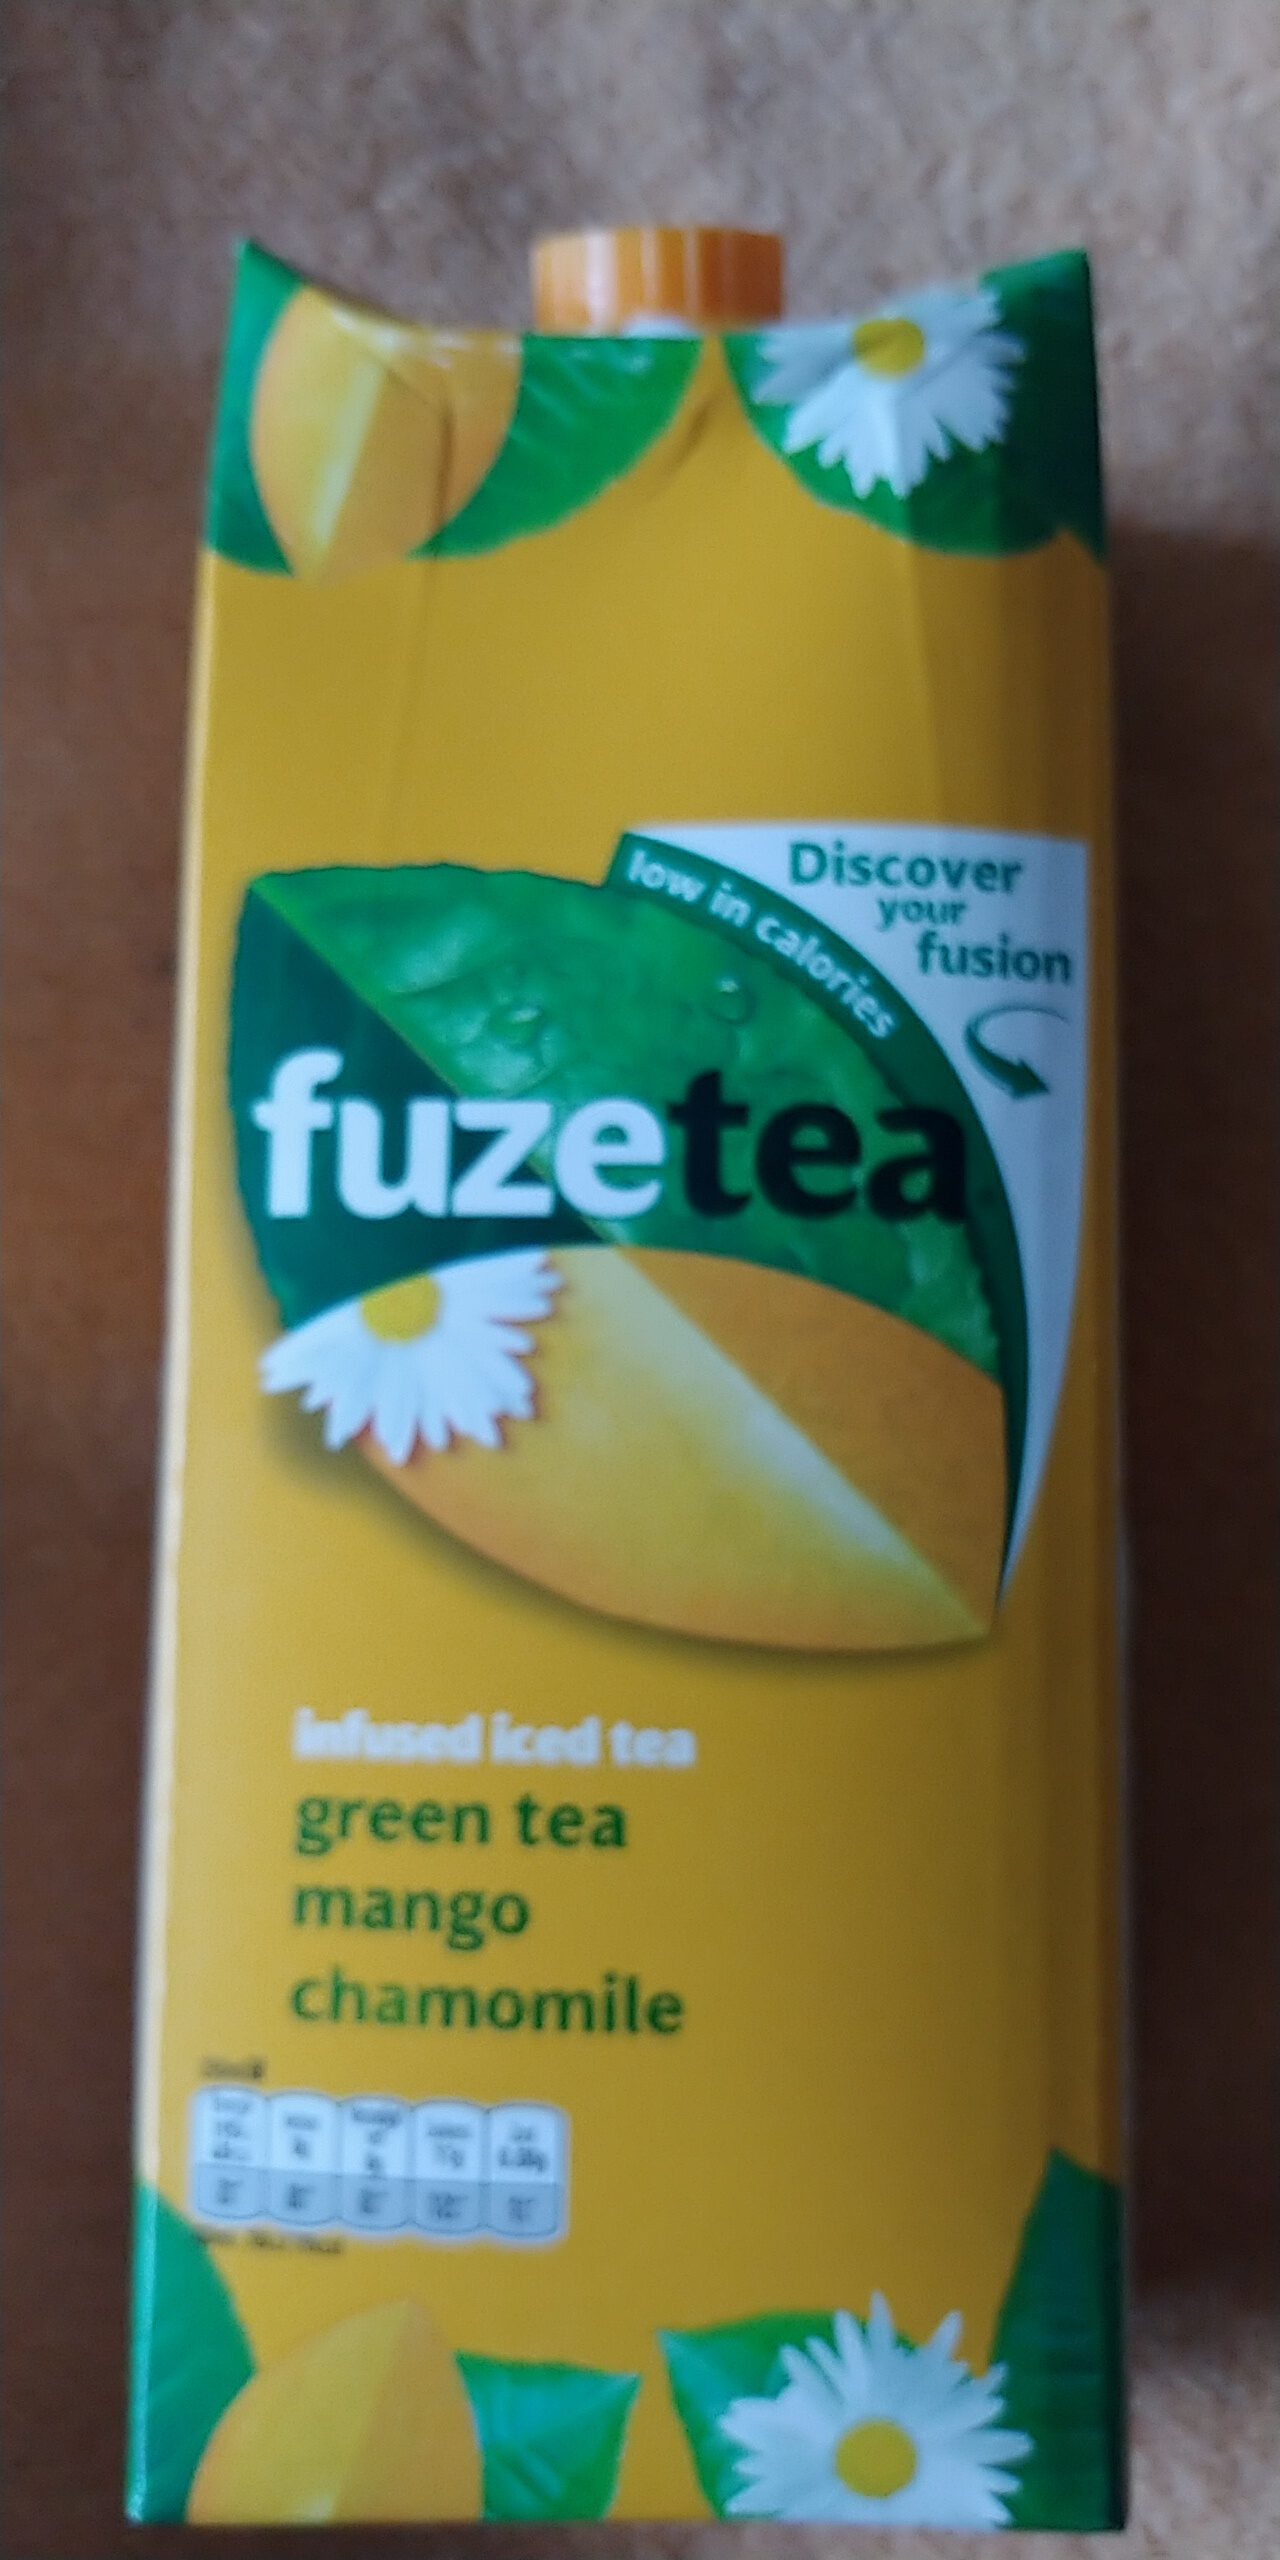 Fuze tea green tea mango chamomile - Produit - nl